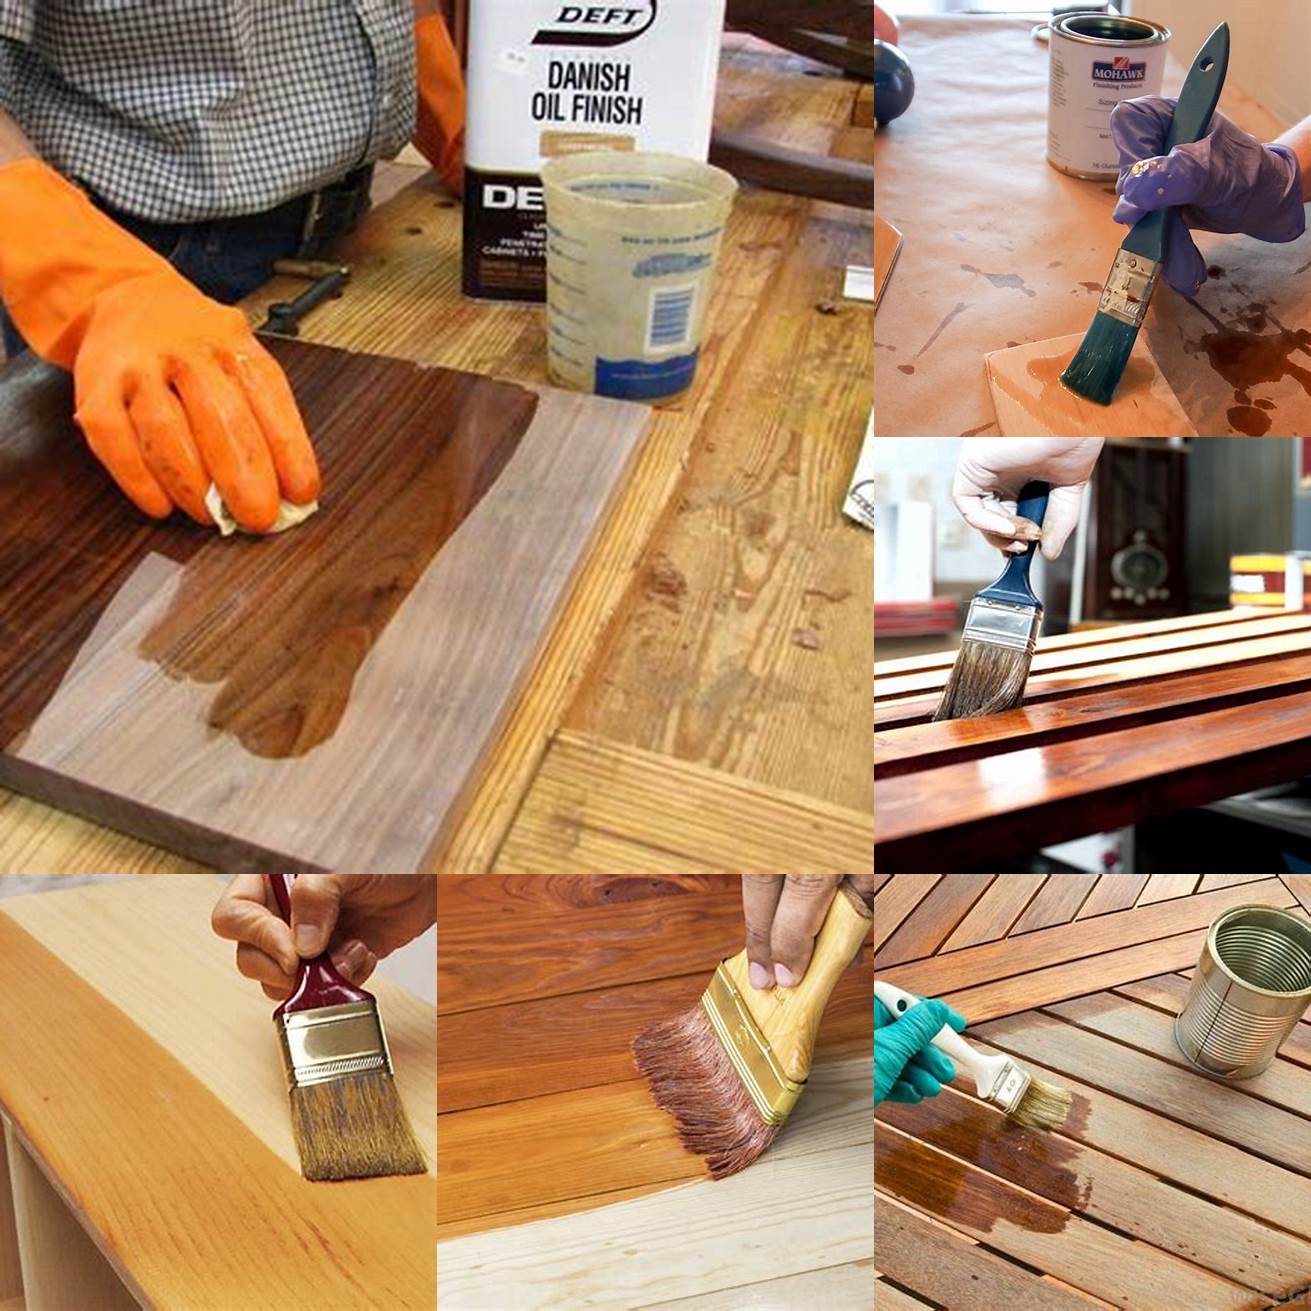 Applying sealant or varnish to teak wood furniture